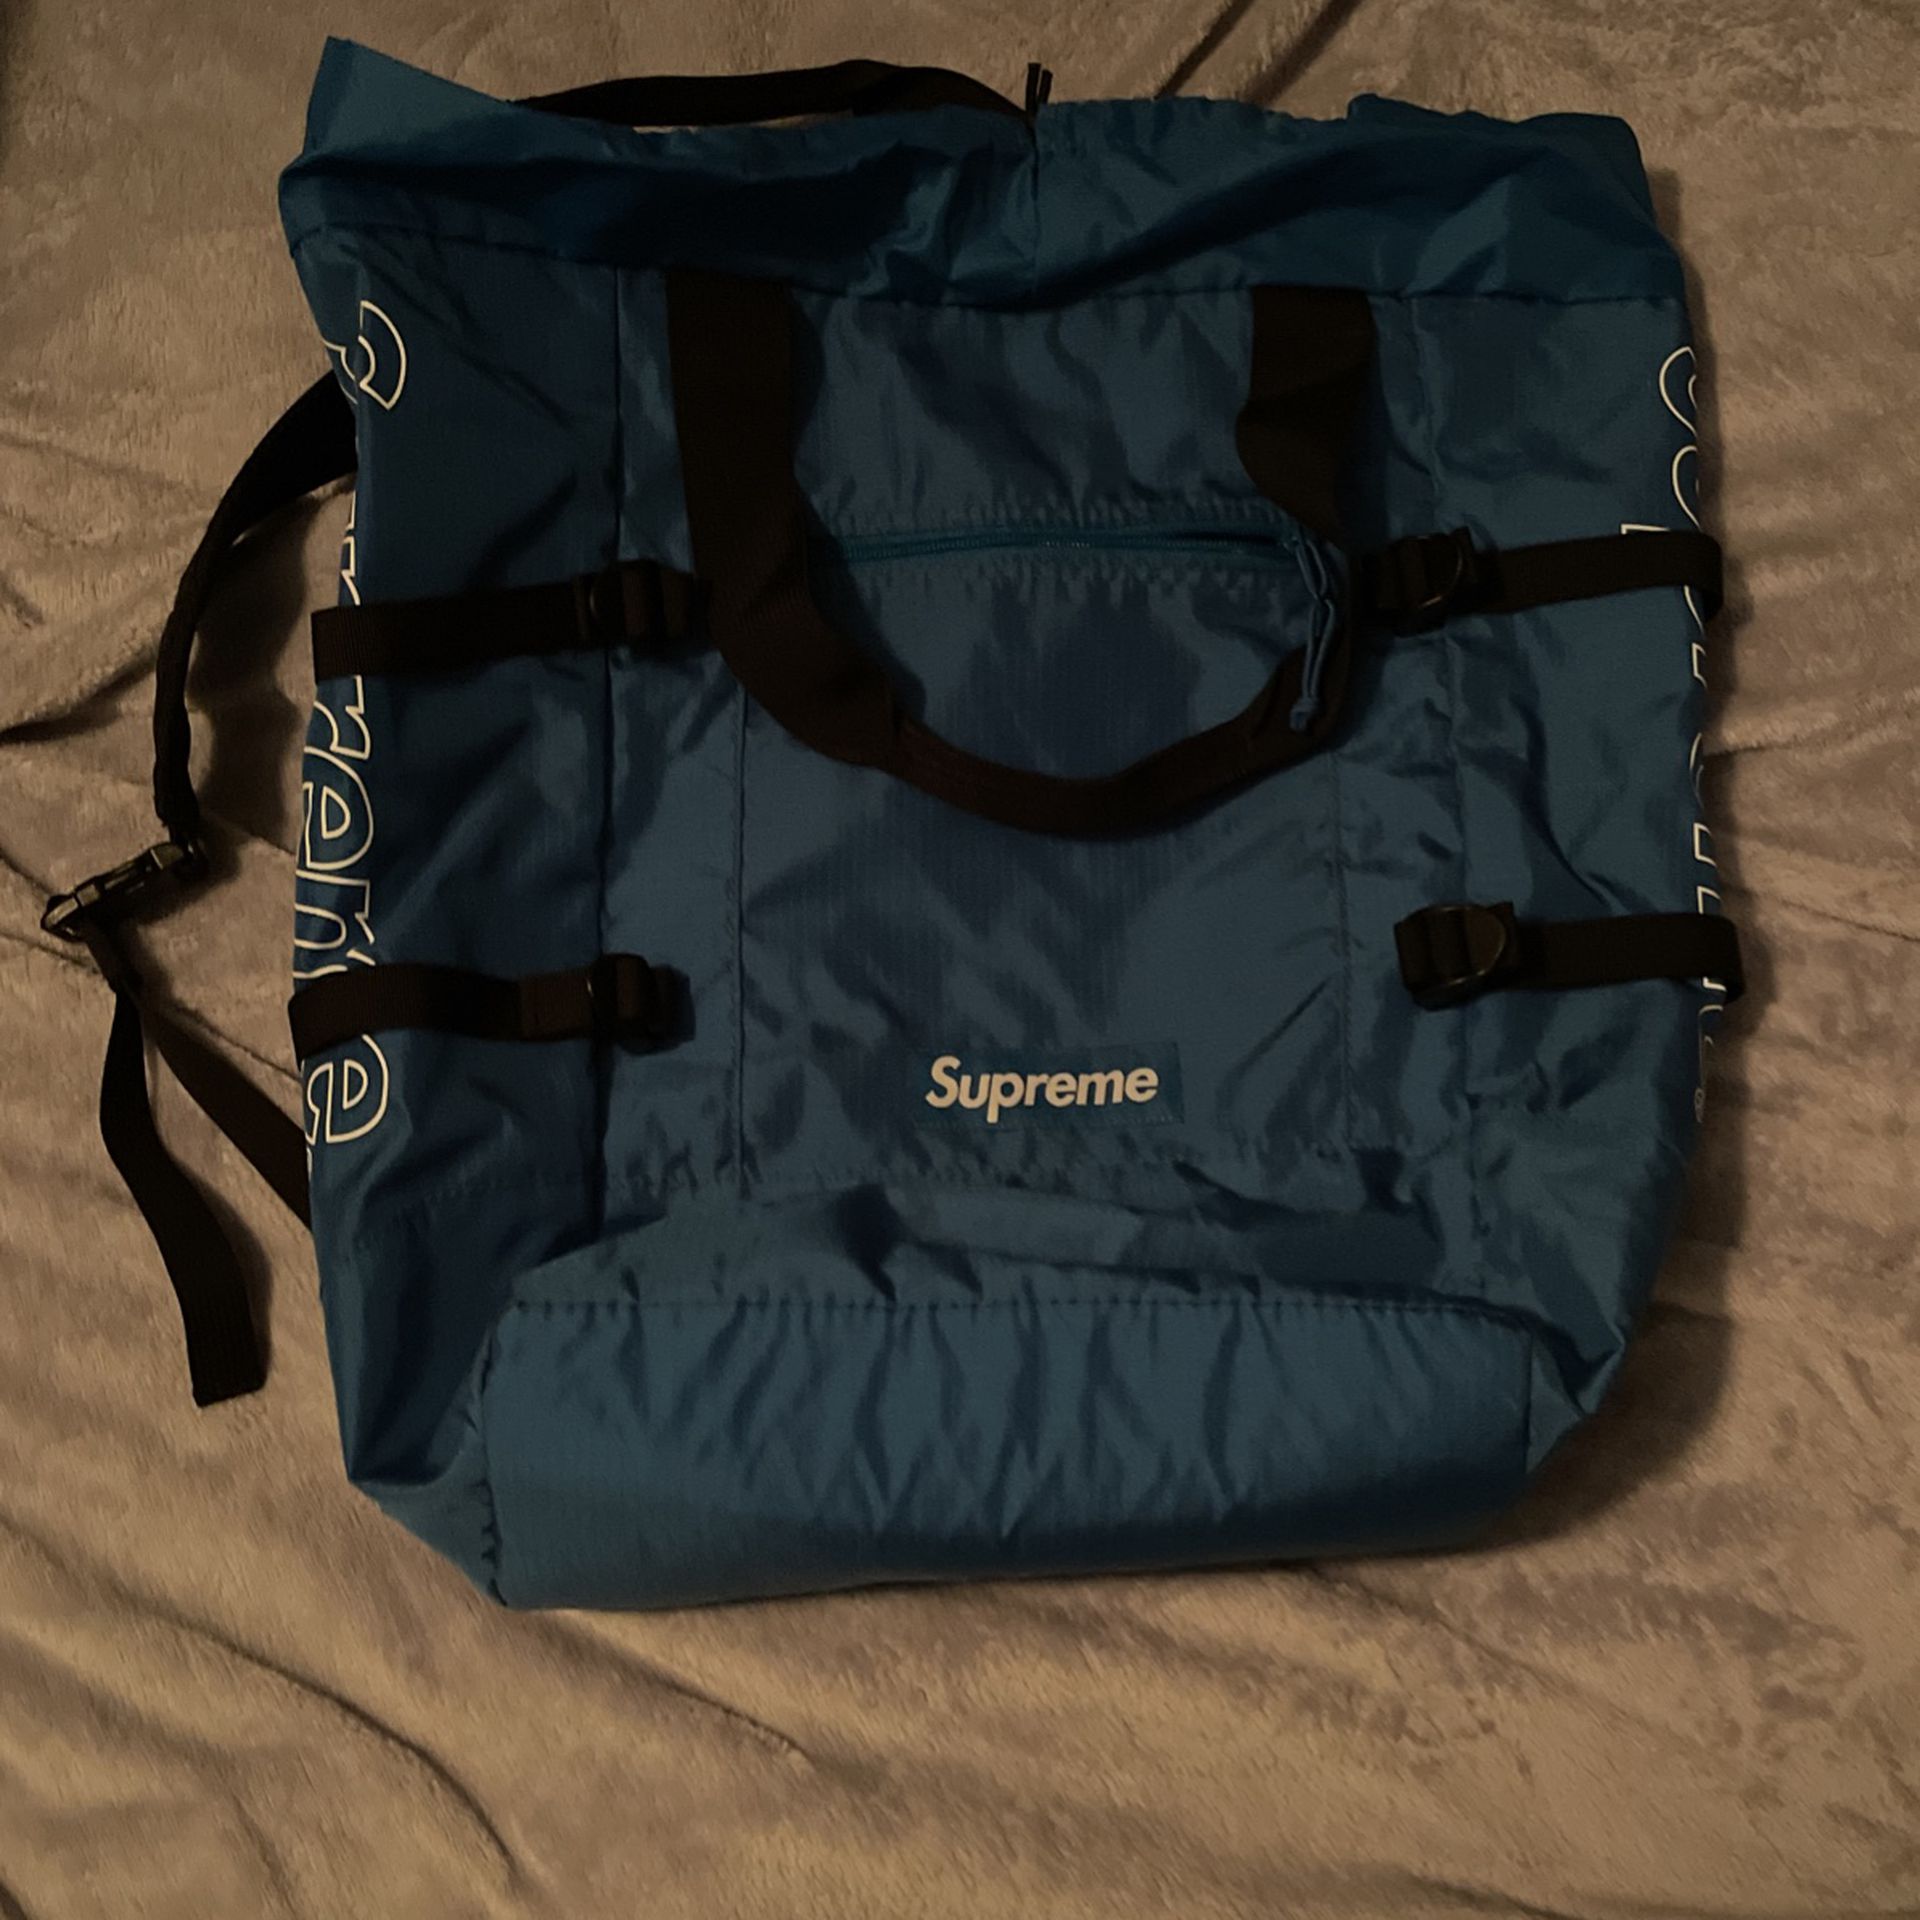 Supreme Tote Backpack for Sale in Orangevale, CA - OfferUp